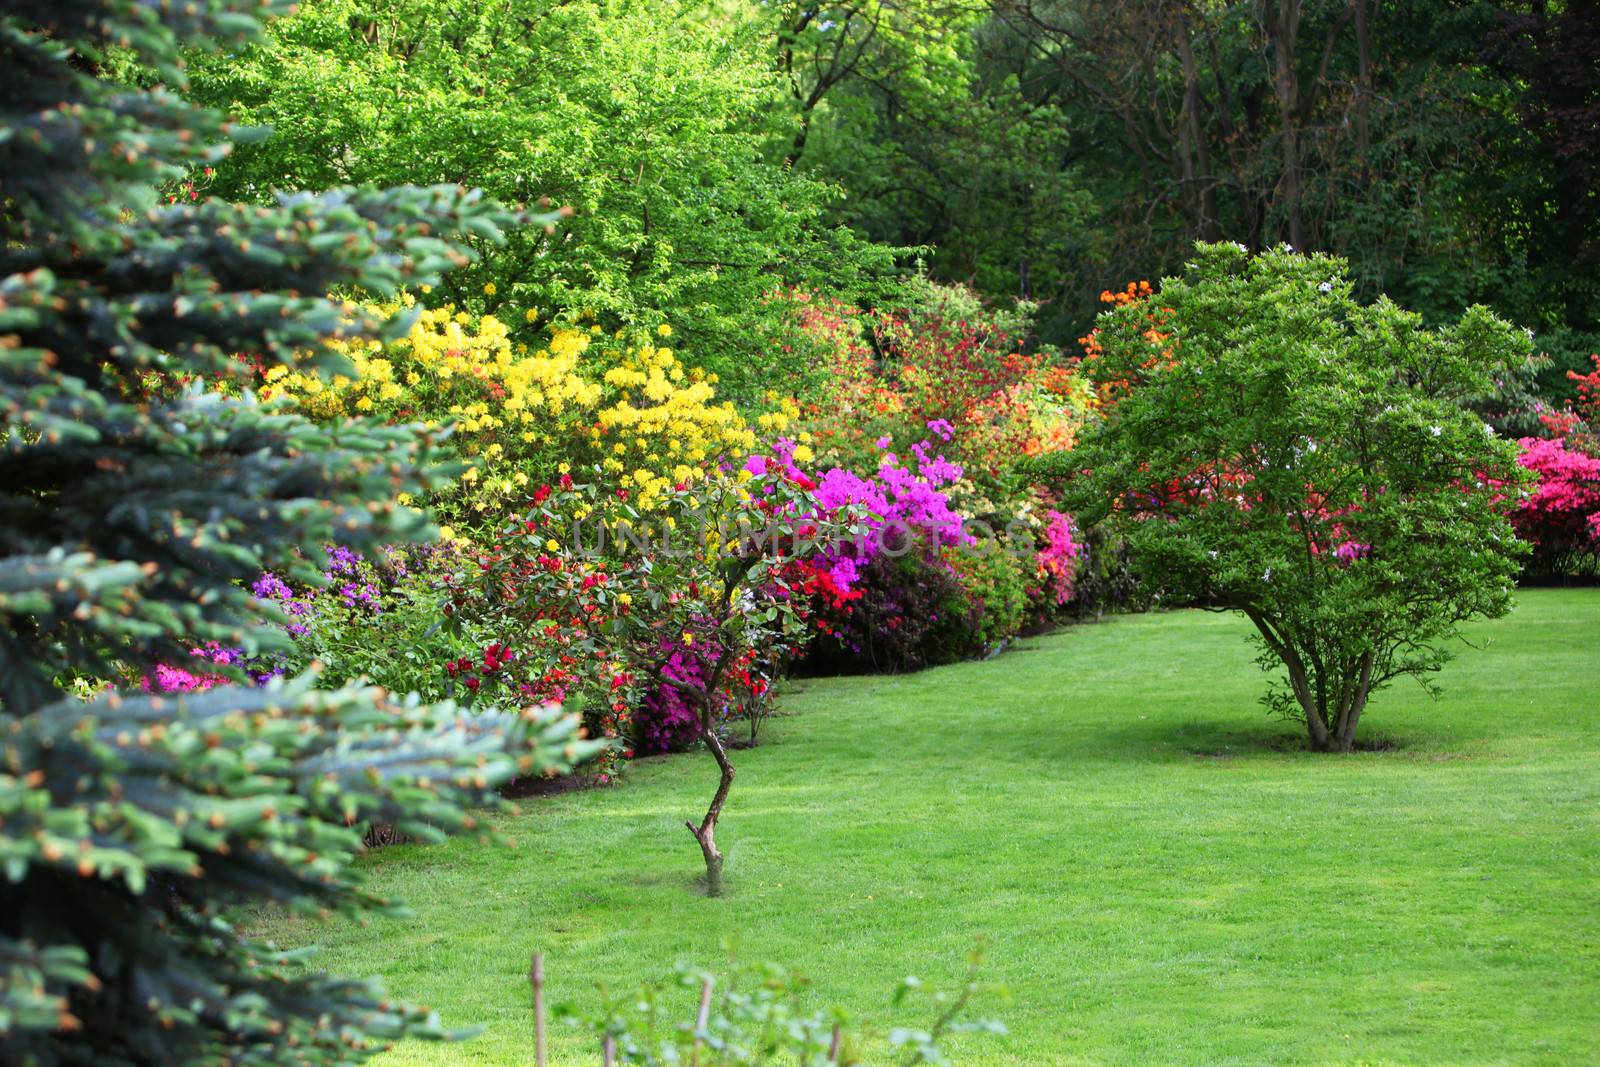 Colourful flowering shrubs in a spring garden by Farina6000